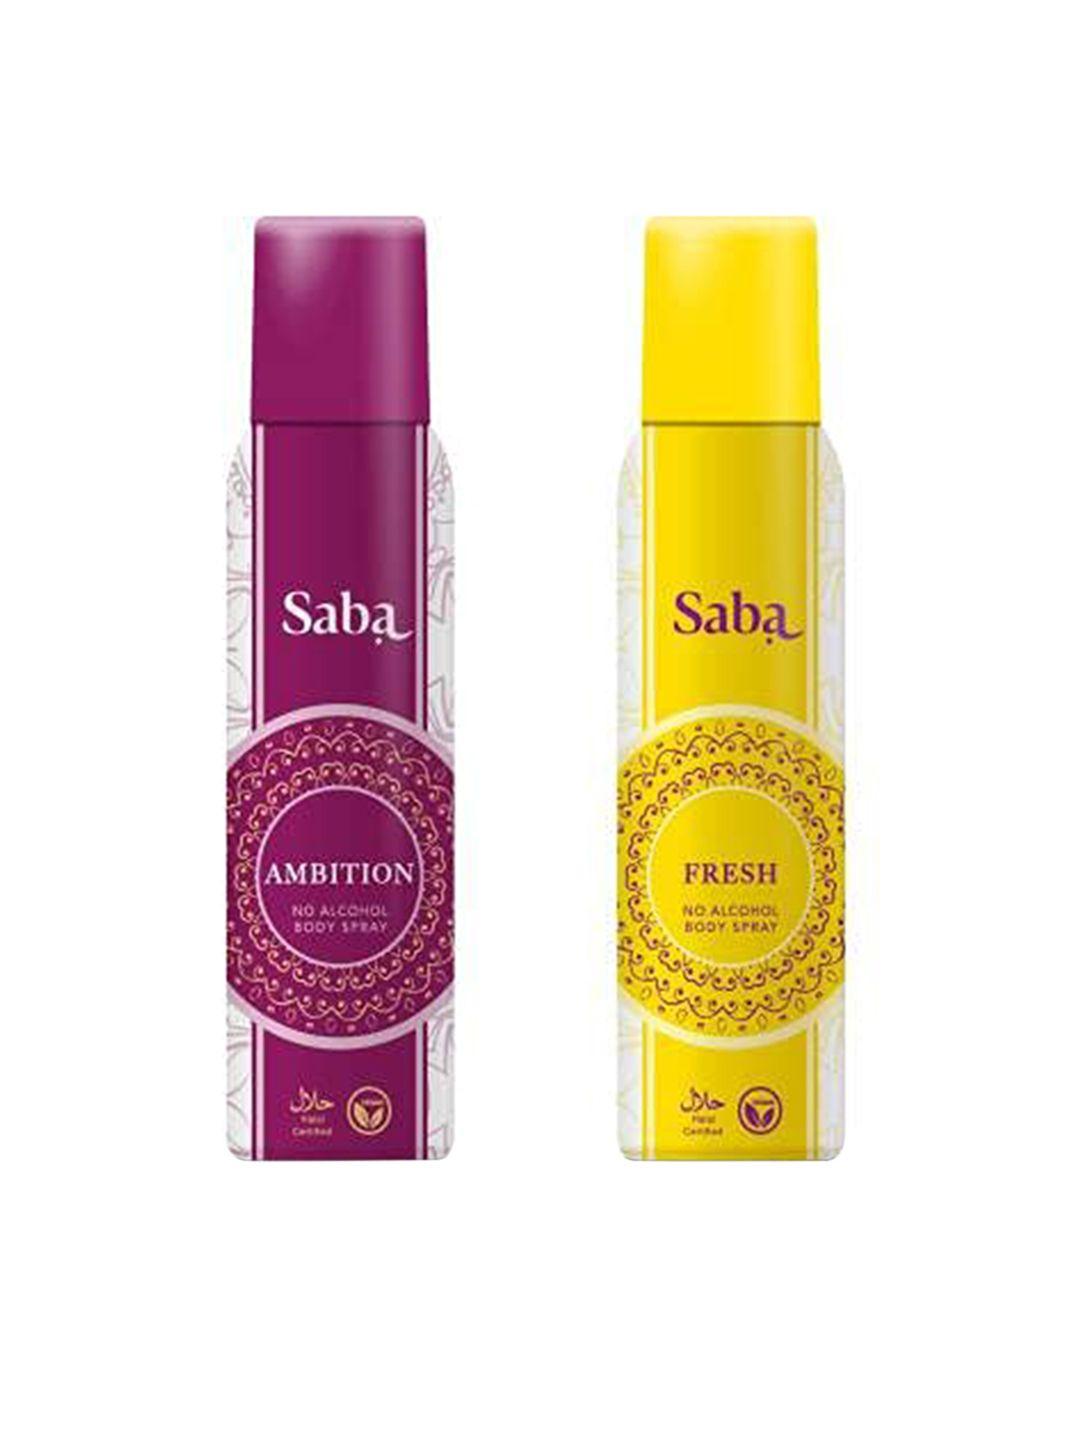 saba women set of ambition + fresh no alcohol body spray - 150 ml each